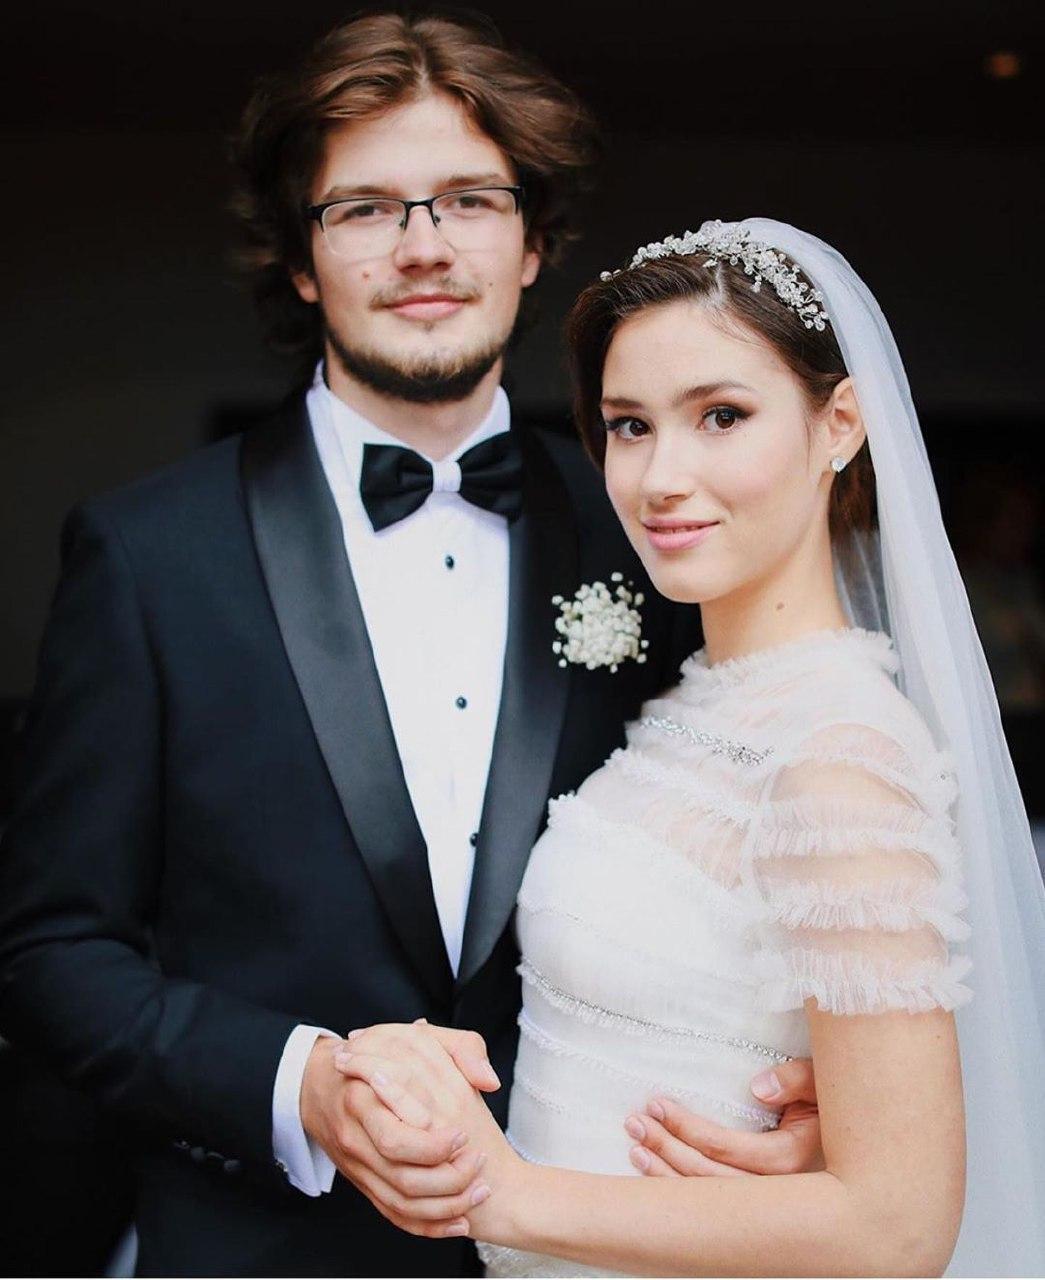 18-летняя дочь Немцова вышла замуж